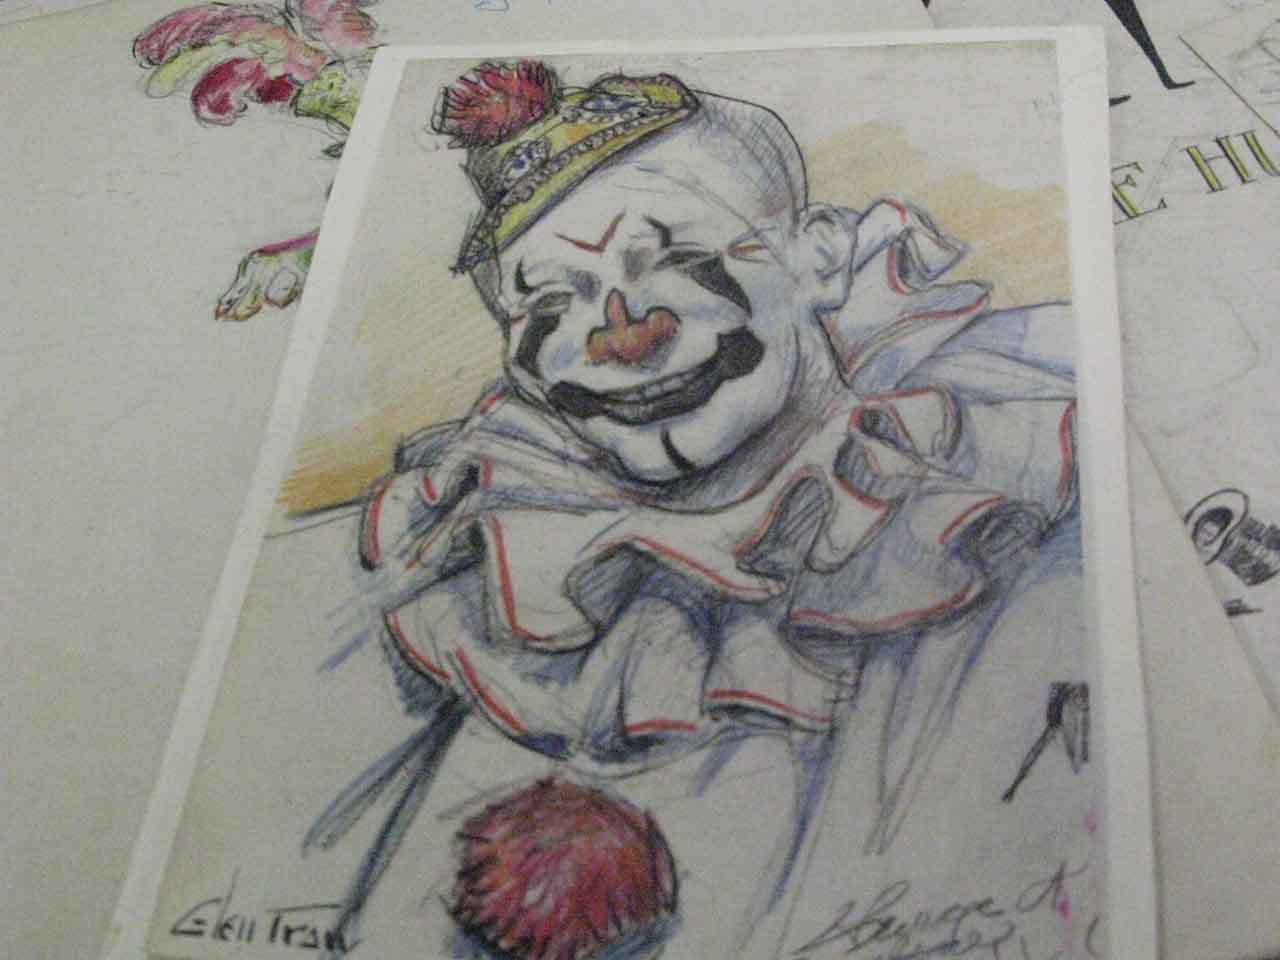 Sketch of a clown in makeup